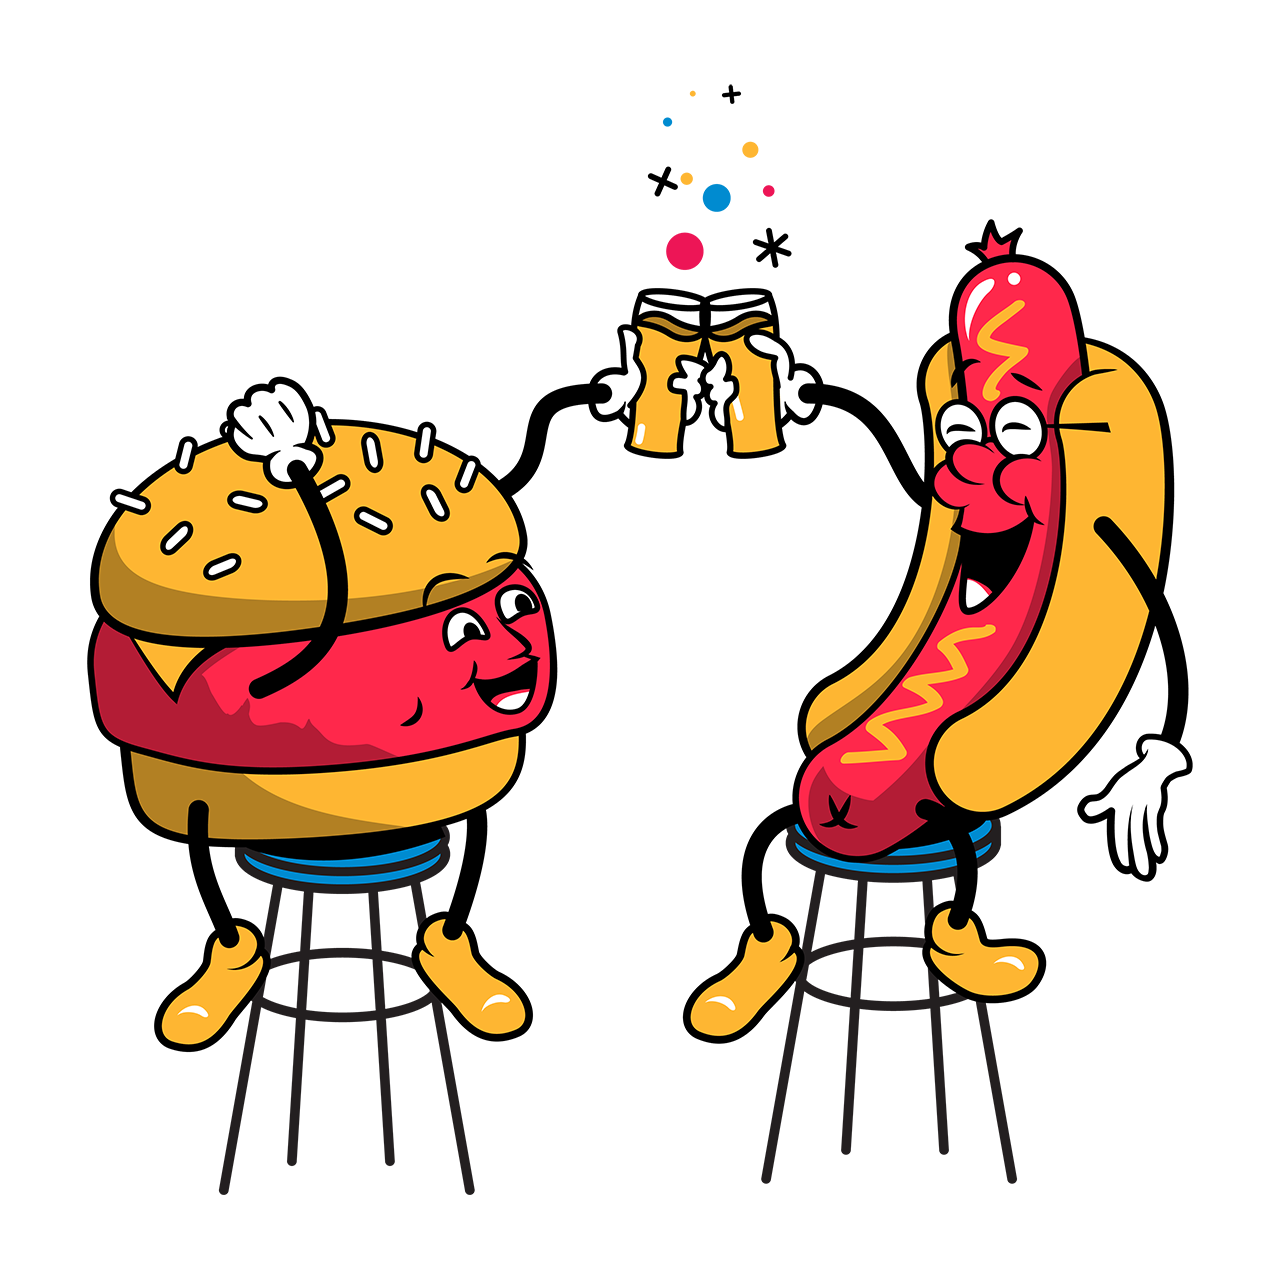 Hamburger and Hotdog toast, clinking beer glasses, while perched on high bar stools